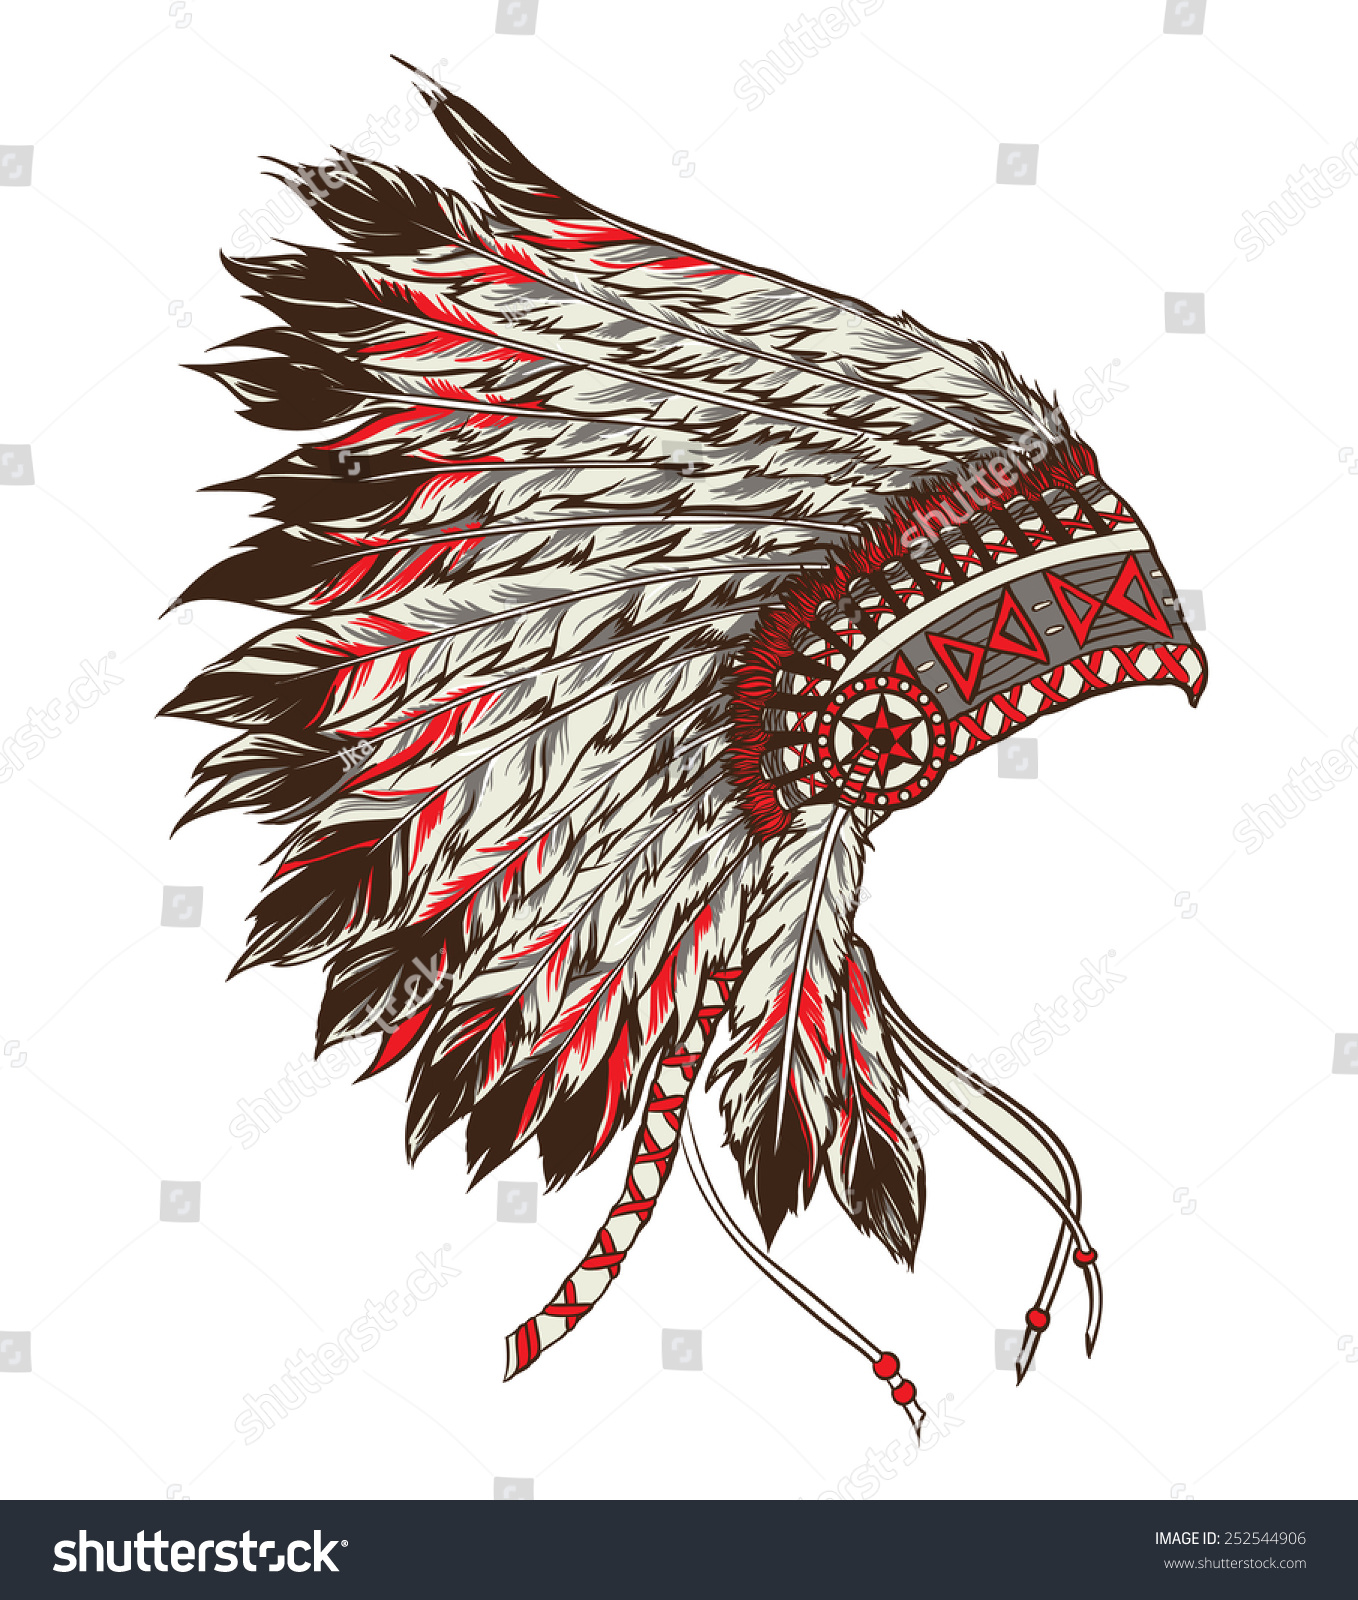 Native American Indian Chief Headdress Vector Stock Vector 252544906 ...